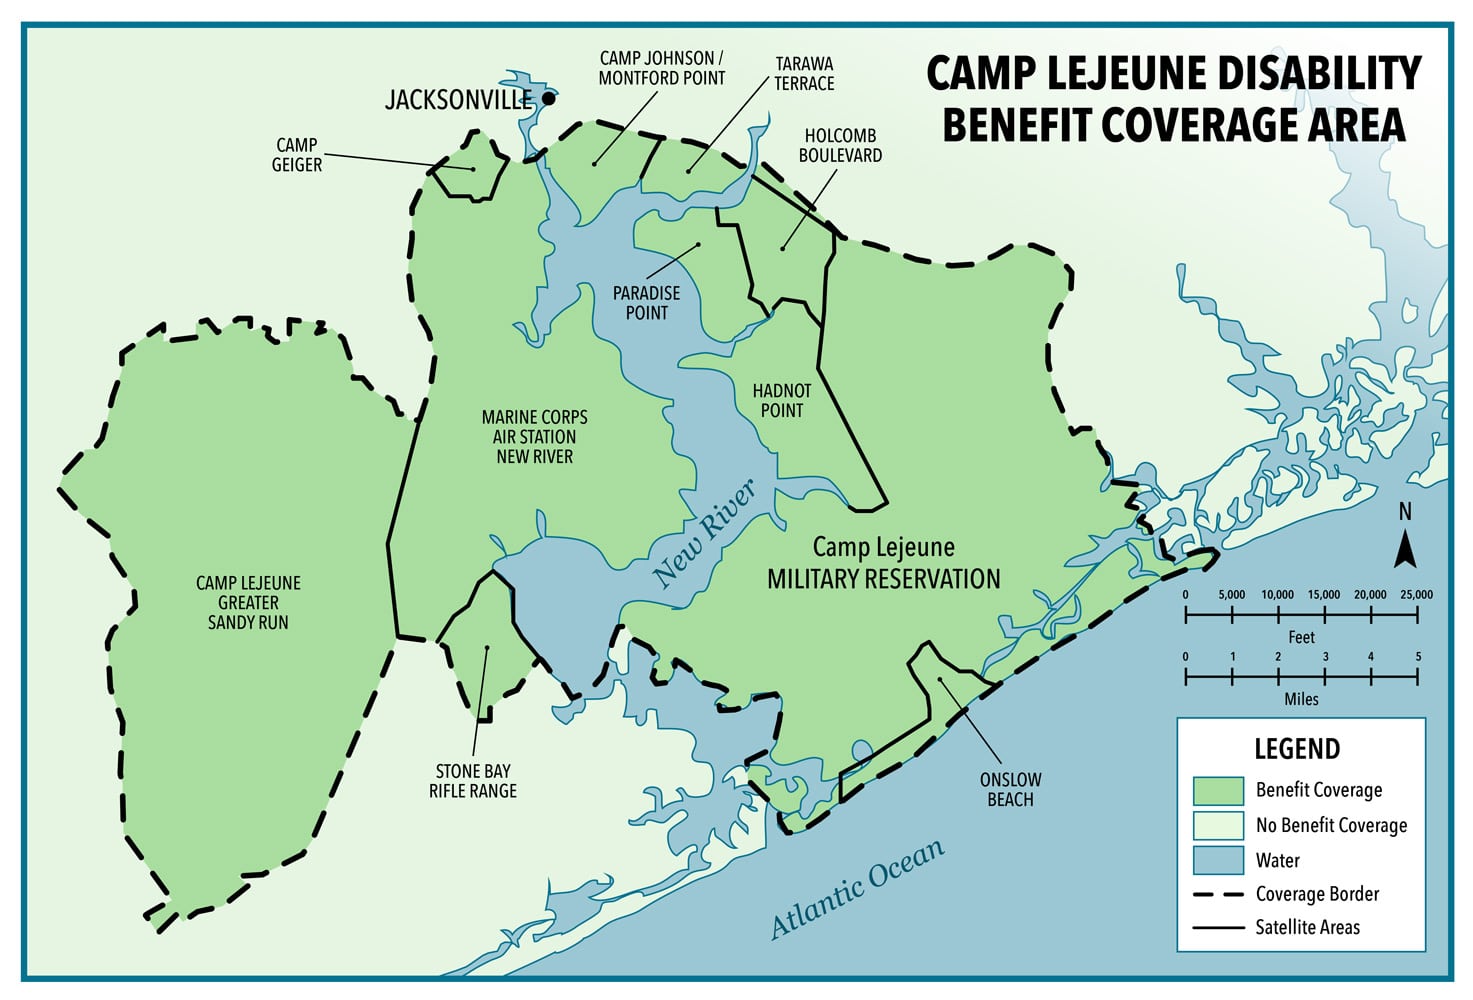 Camp Lejeune Disability Coverage Area